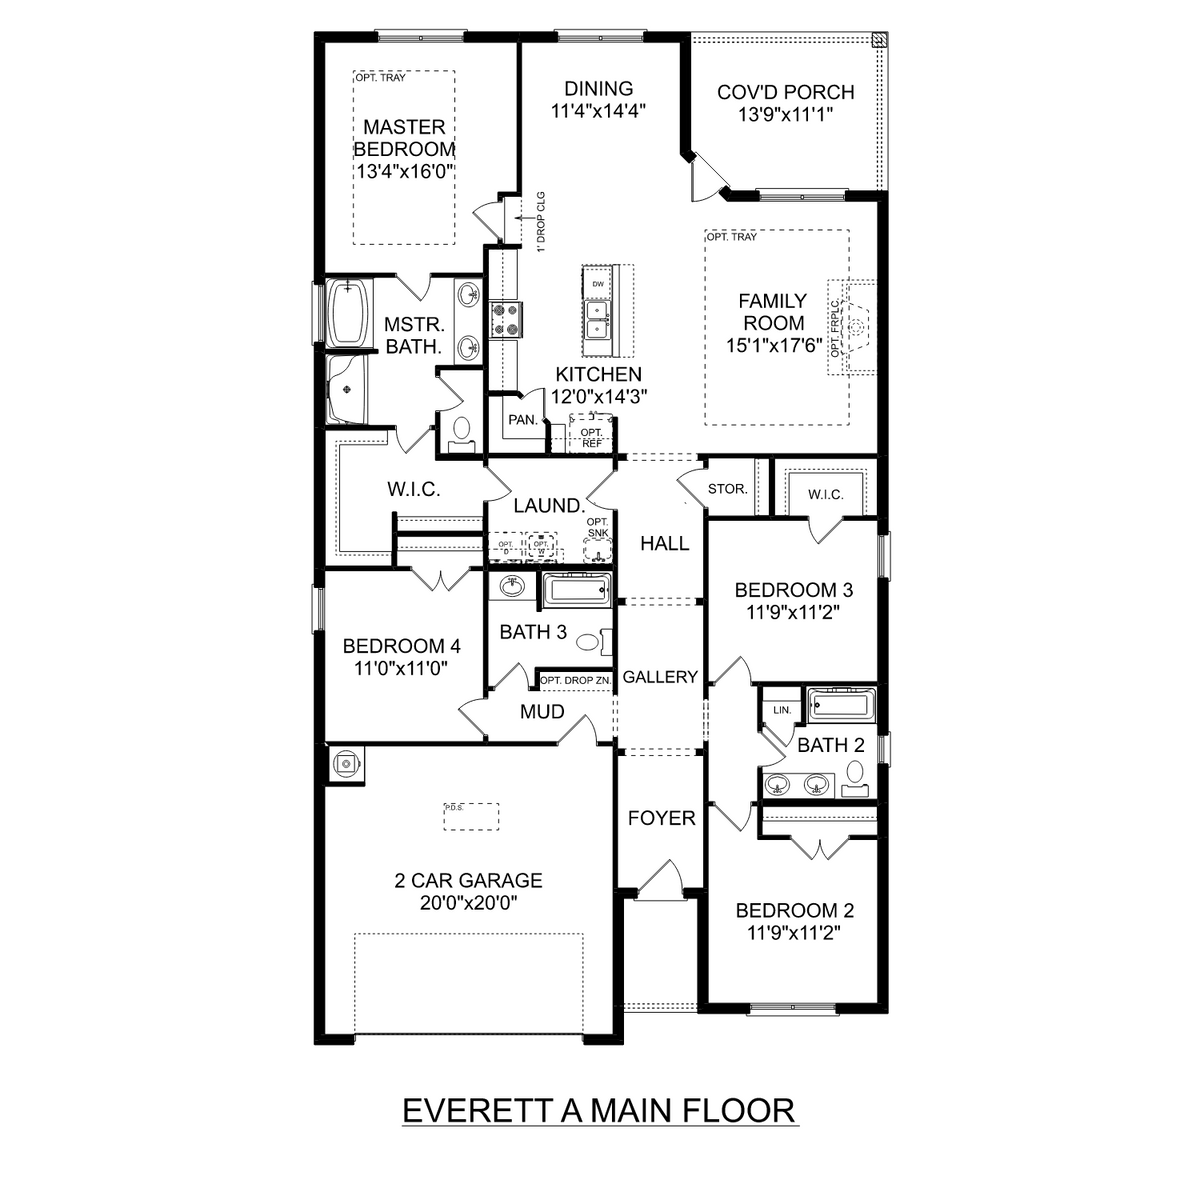 1 - The Everett floor plan layout for 6252 Pisgah Drive in Davidson Homes' Spragins Cove community.